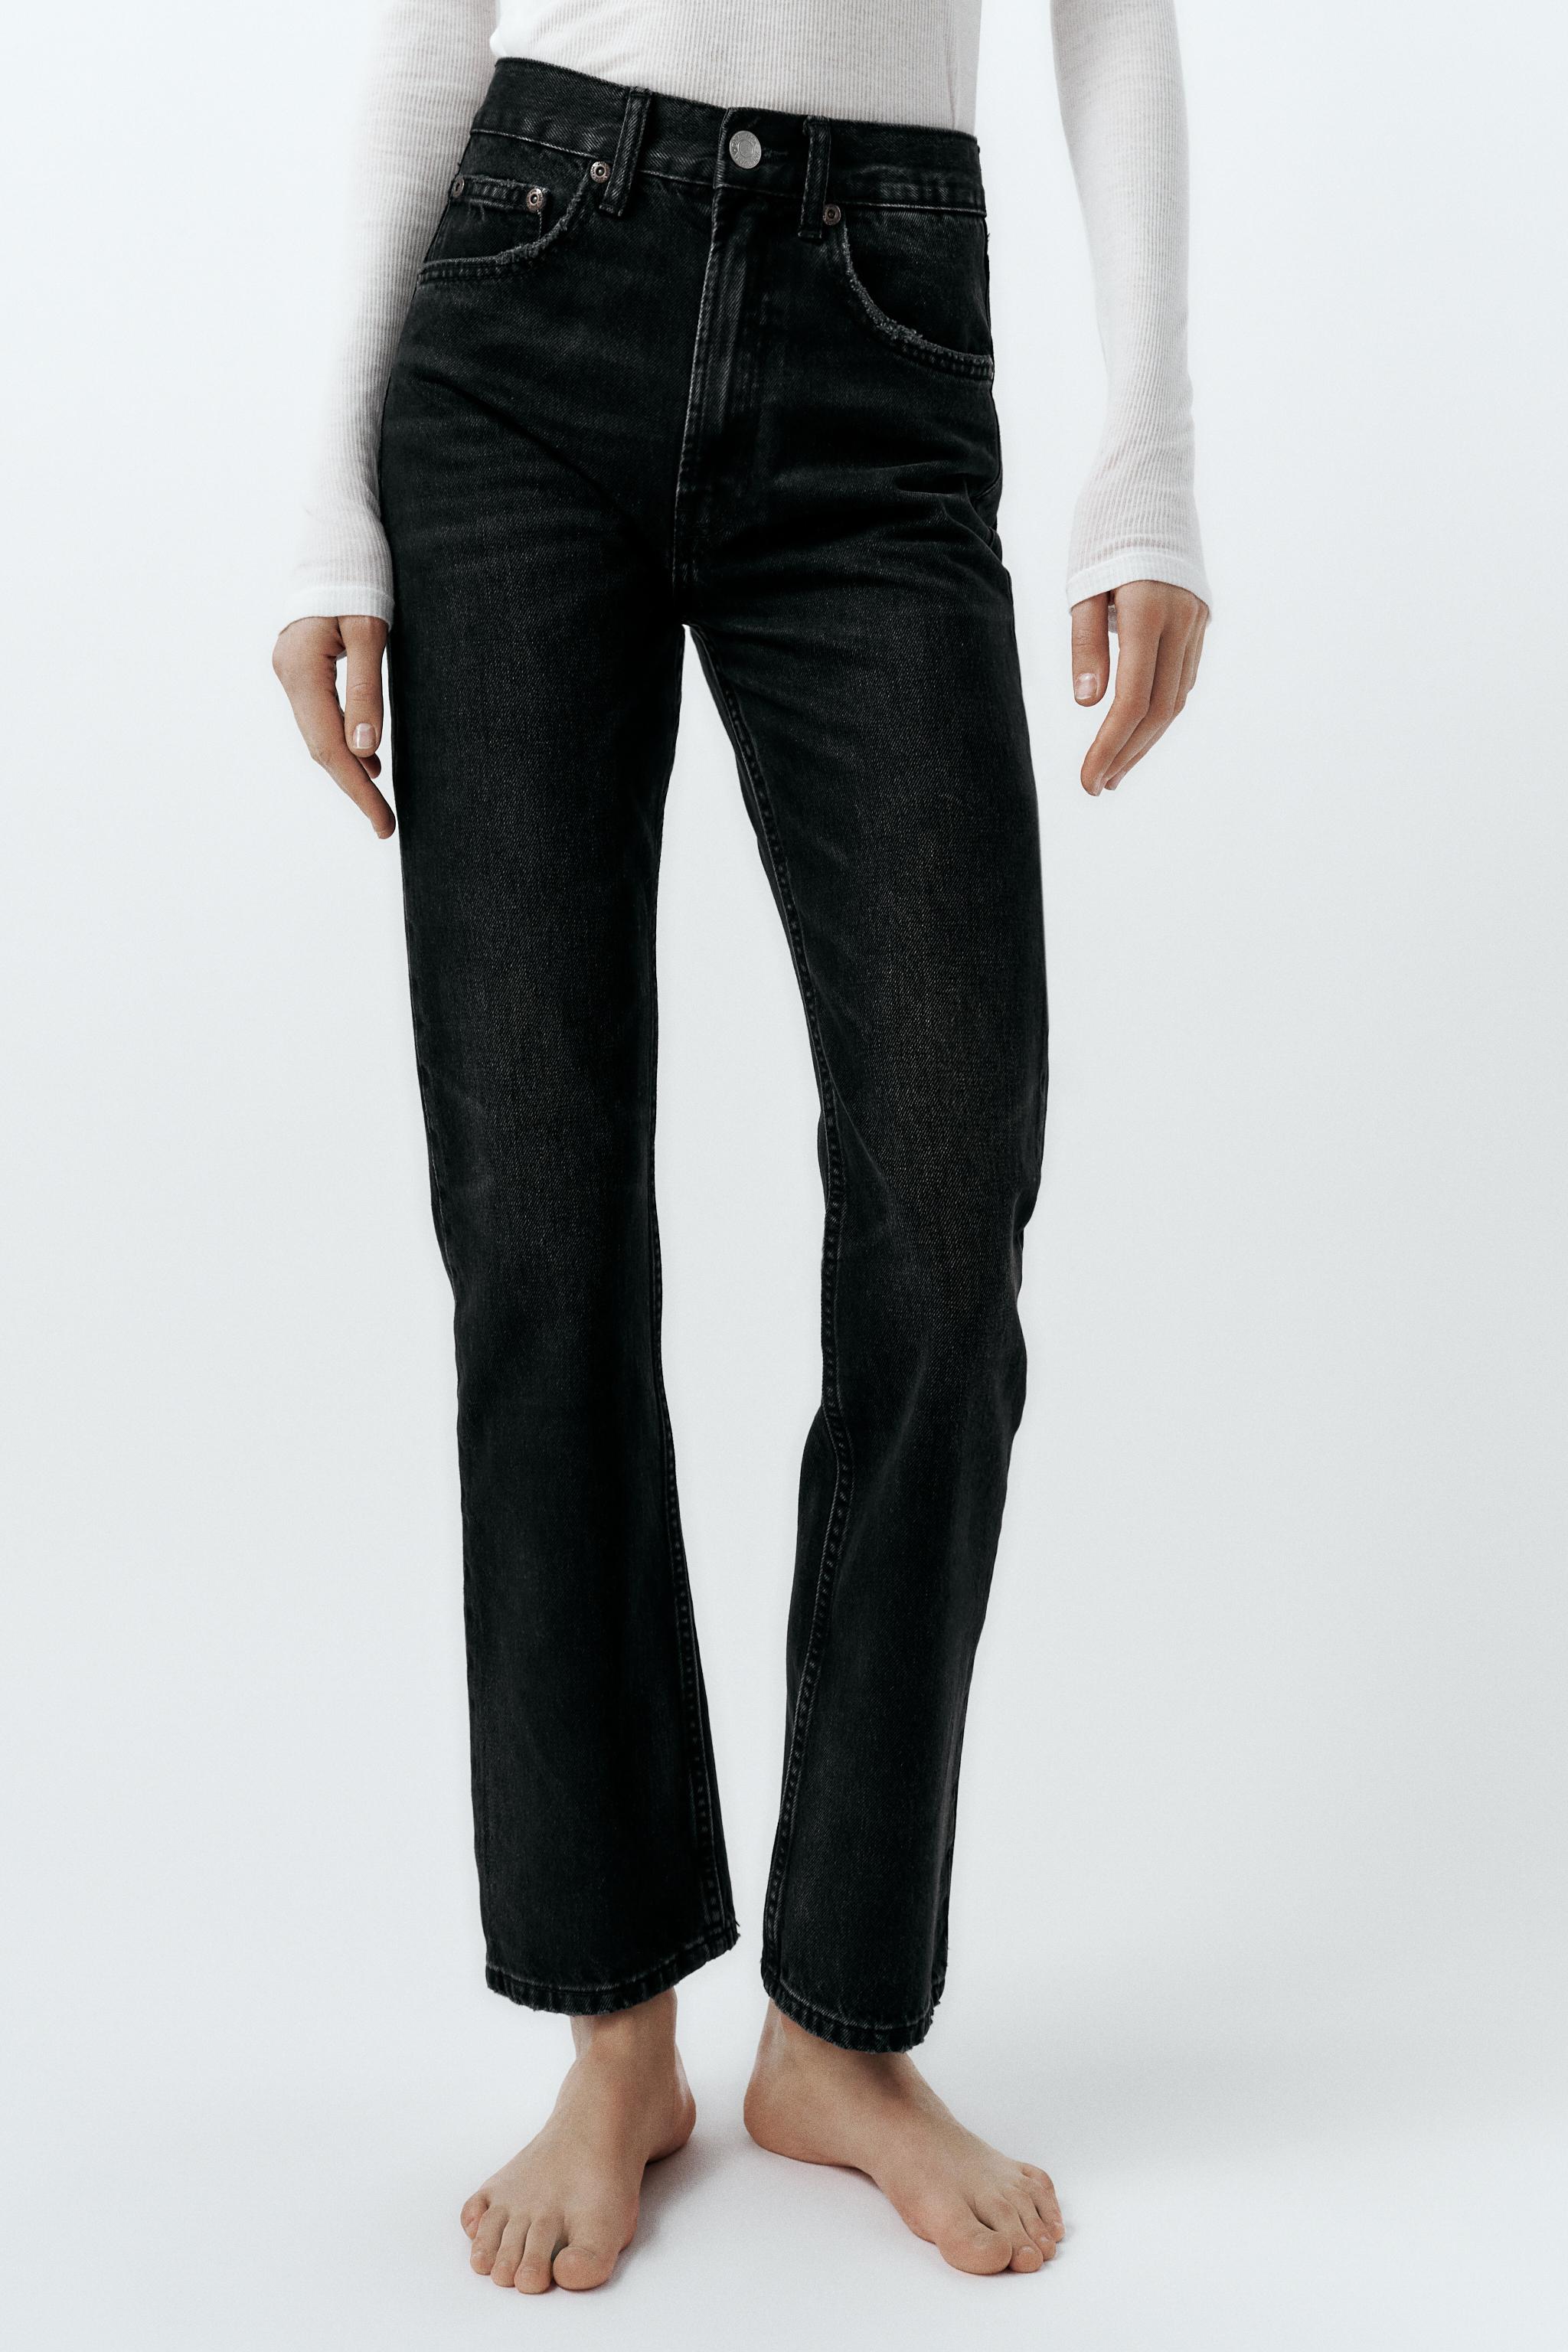 Buy BuyNewTrend Black Denim Straight Wide Leg Women Jeans Online